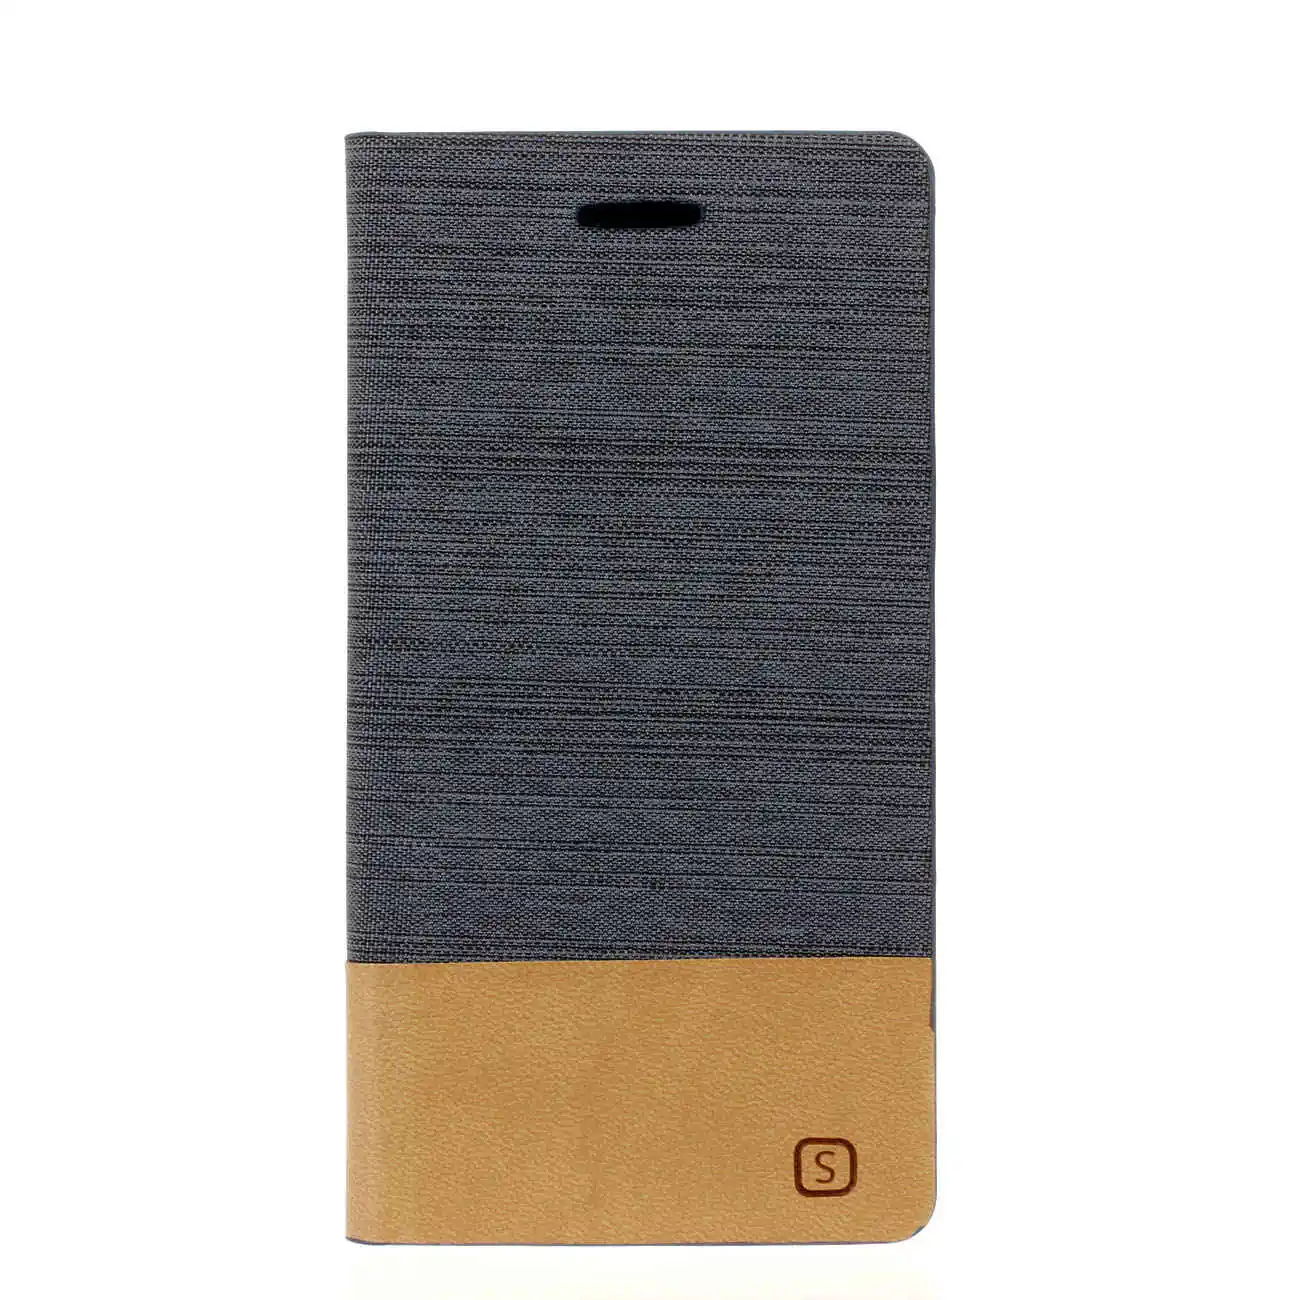 Чехол для samsung Galaxy Note edge N915 N9150 N915T N915G N915F N915S джинсовый кожаный чехол-книжка для телефона SM-N915 SM-N9150 - Цвет: Grey